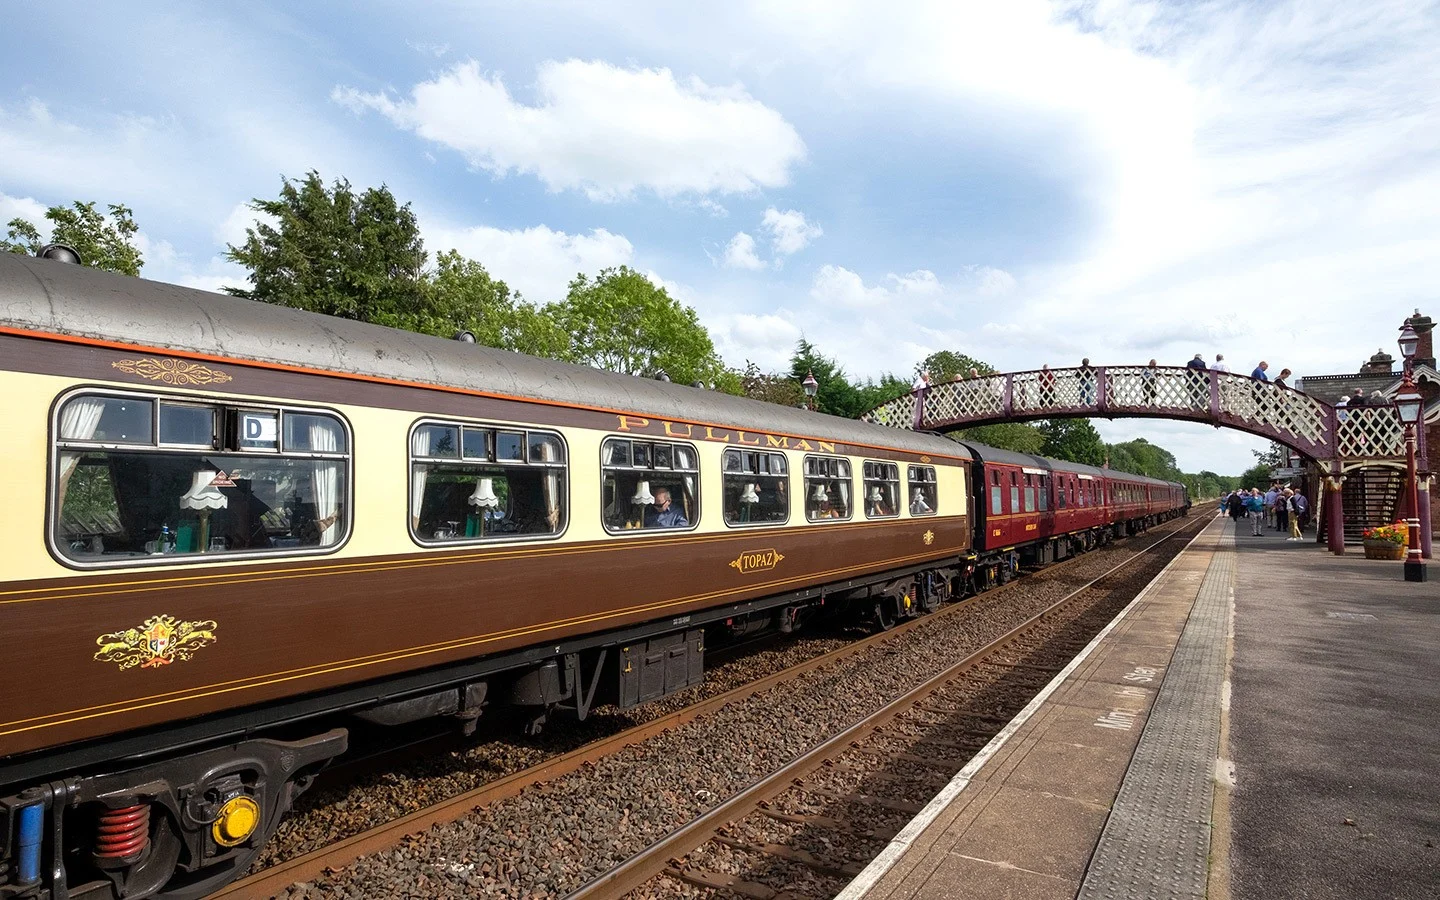 The Settle to Carlisle railway by steam train